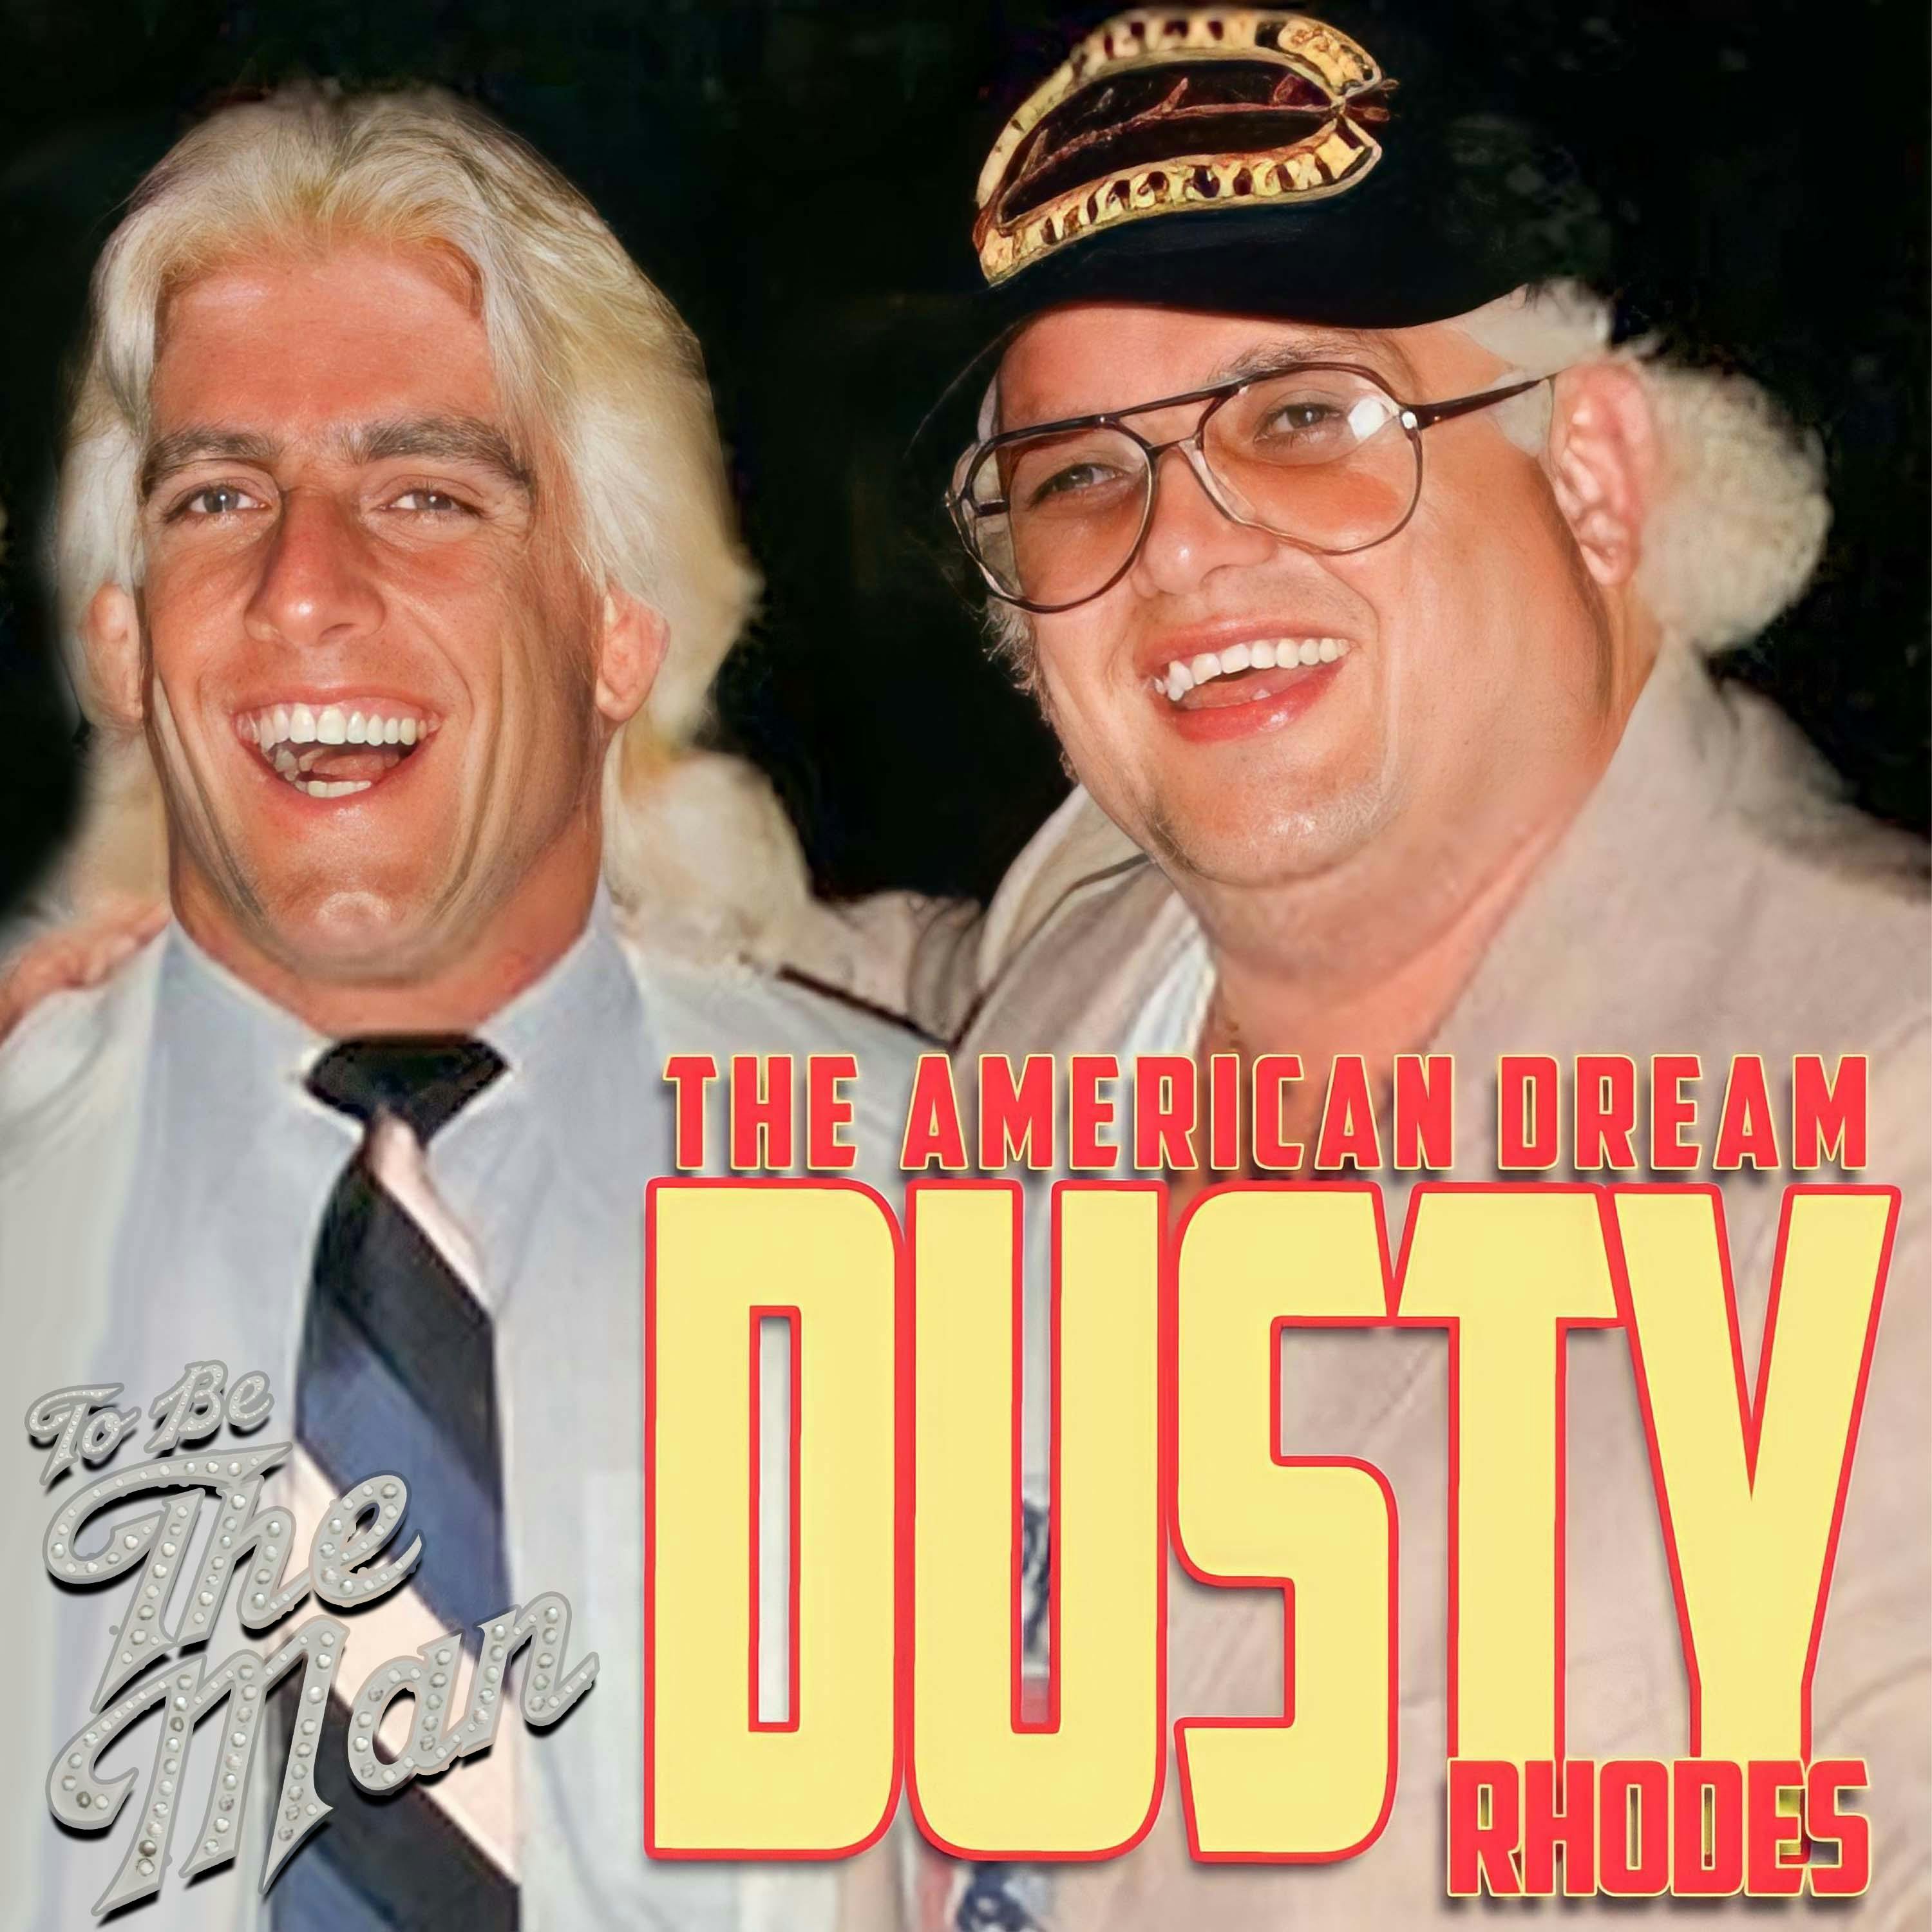 The American Dream: Dusty Rhodes